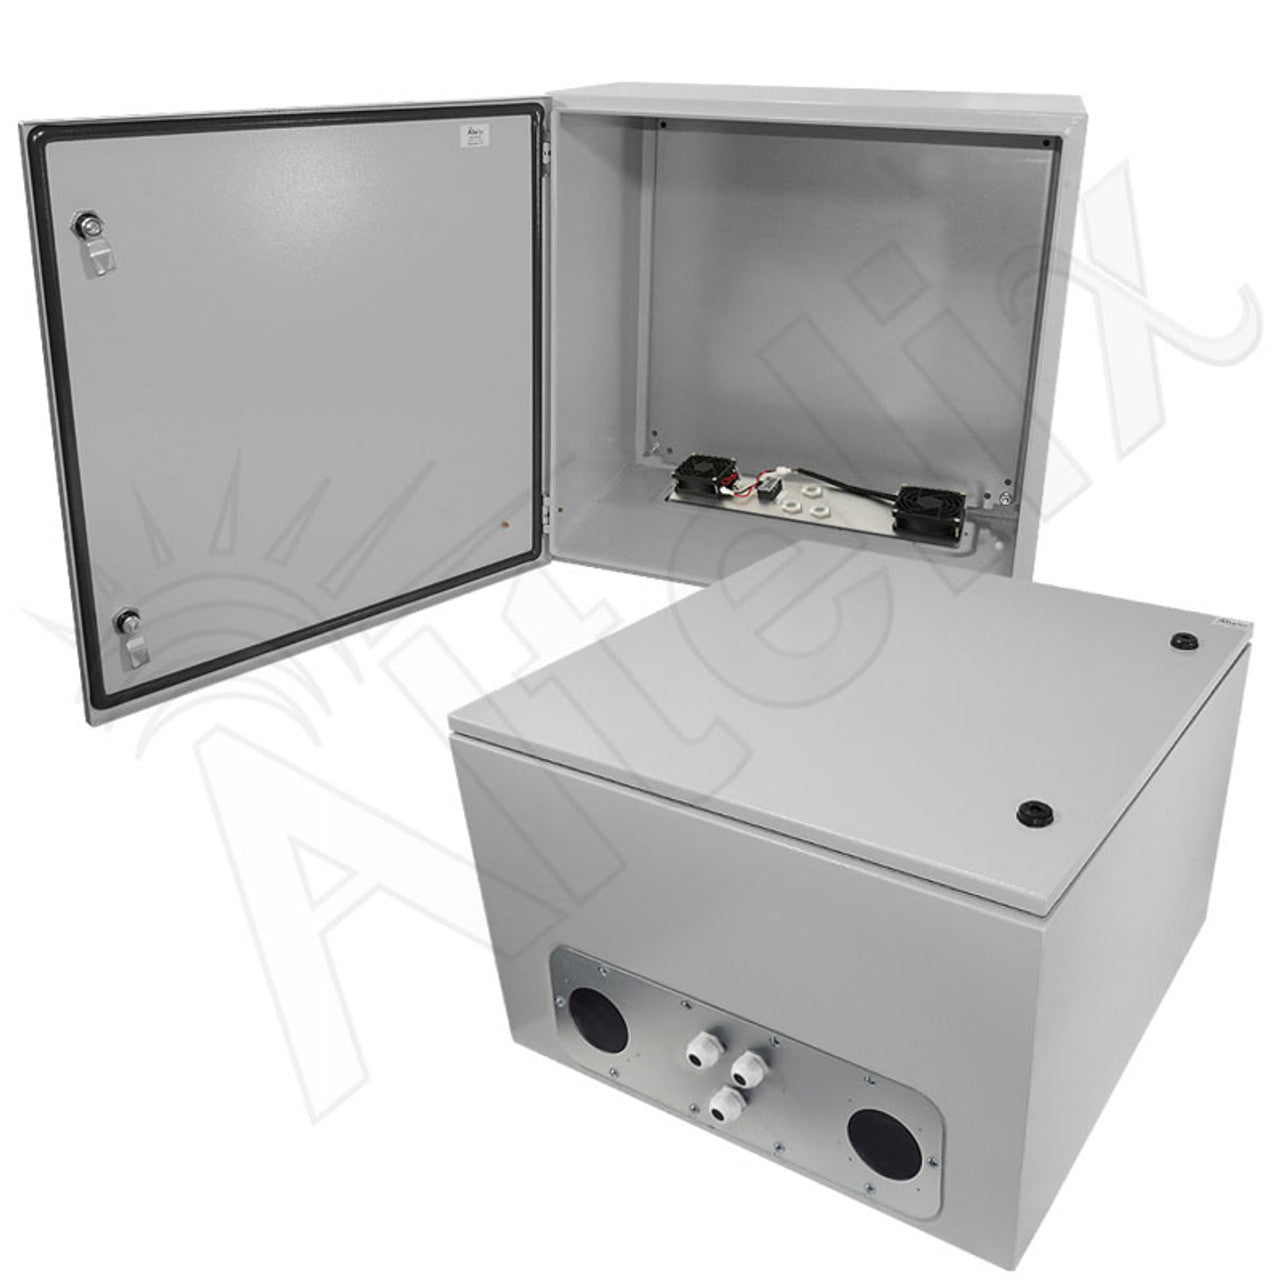 Altelix Steel Weatherproof NEMA Enclosure with Dual 12 VDC Cooling Fans